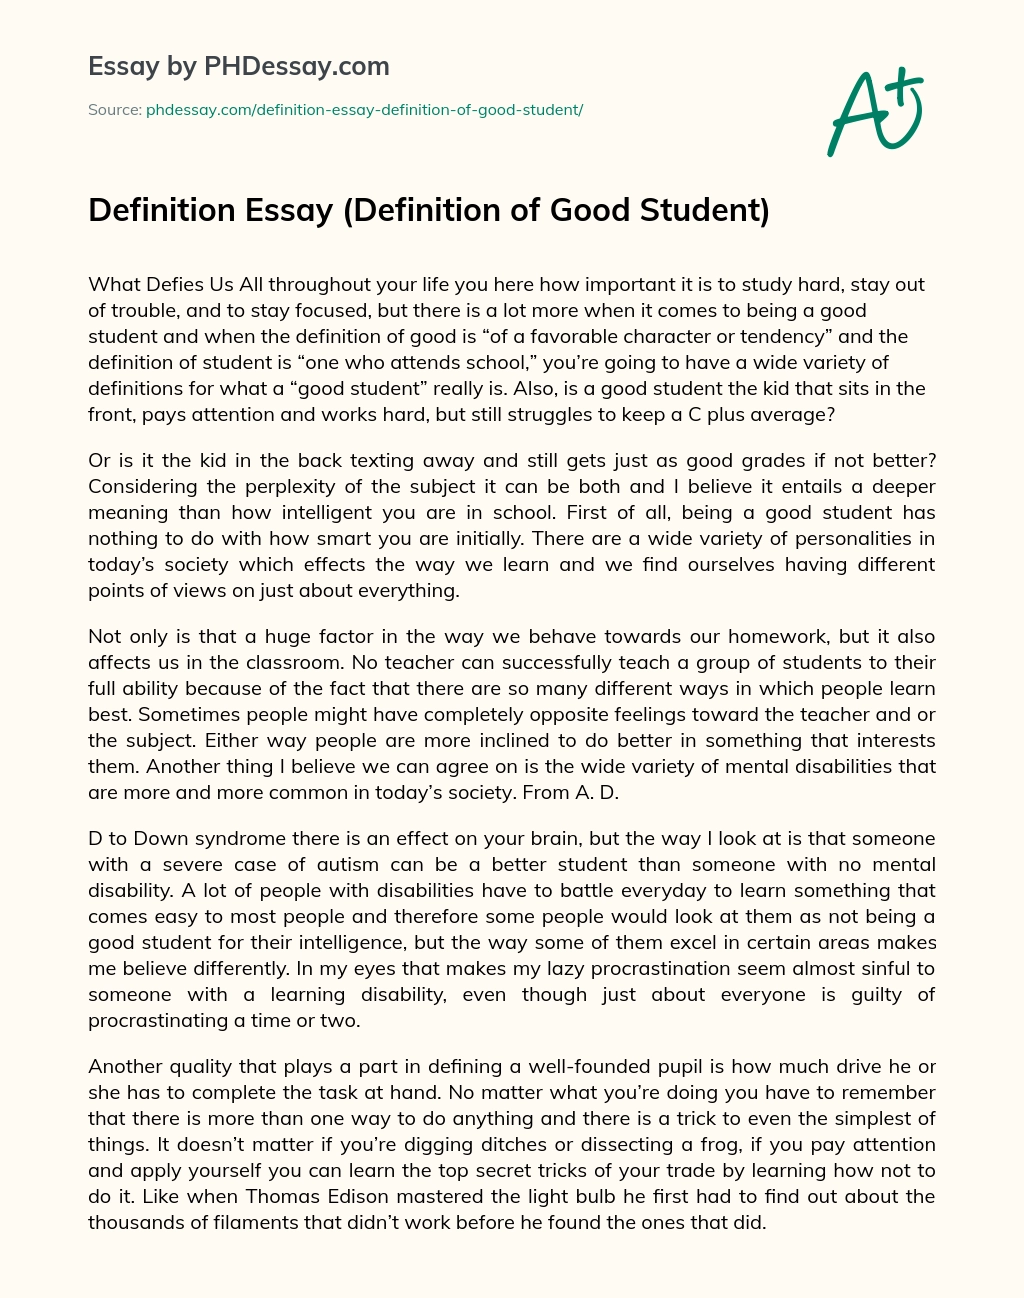 Definition Essay (Definition of Good Student) essay